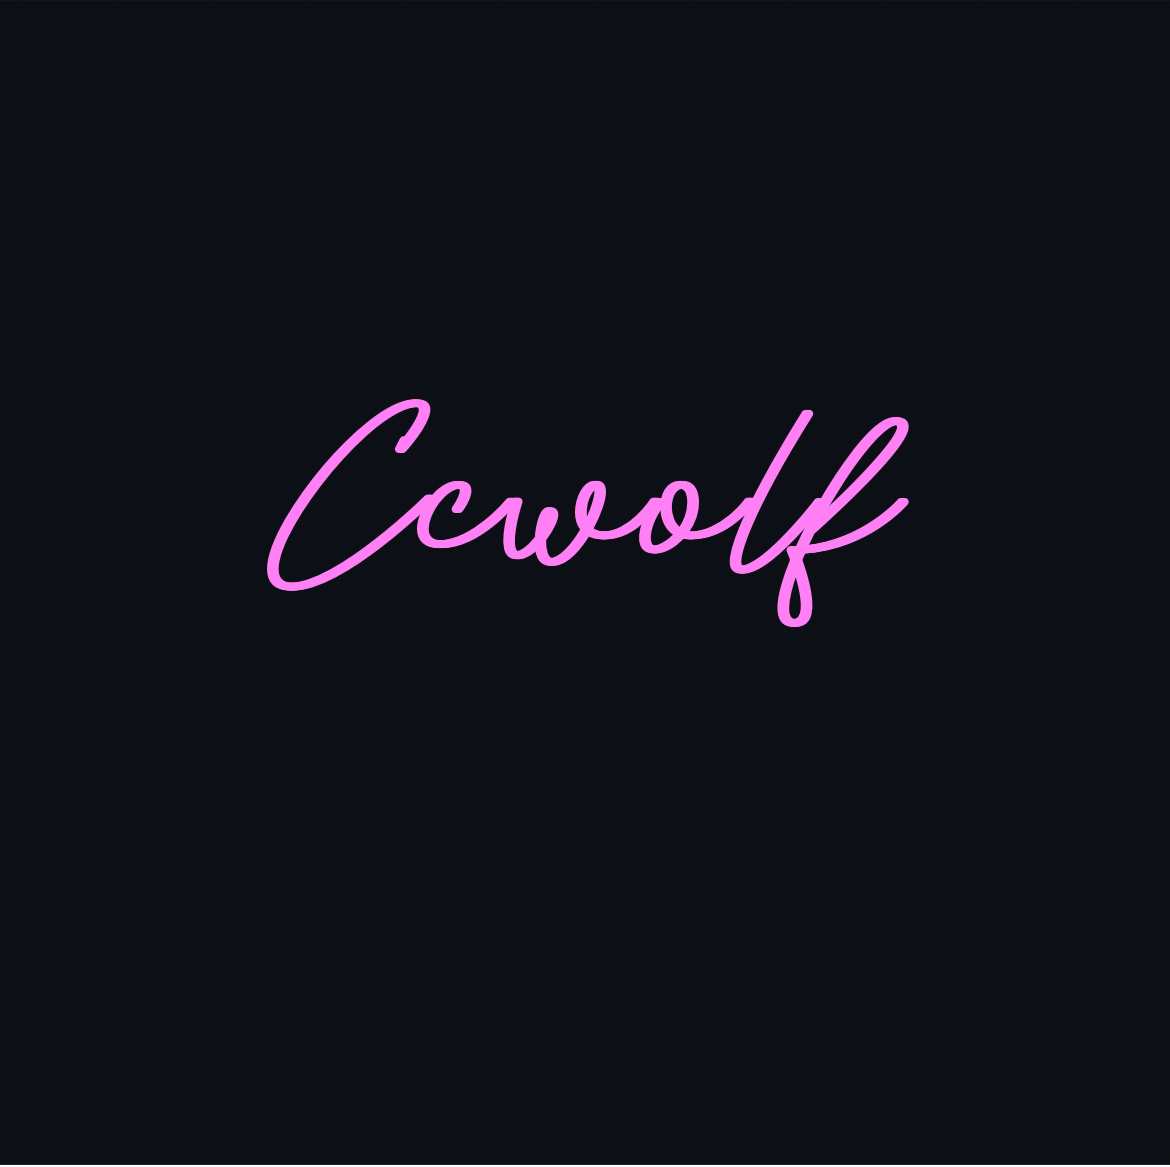 Custom neon sign - Ccwolf